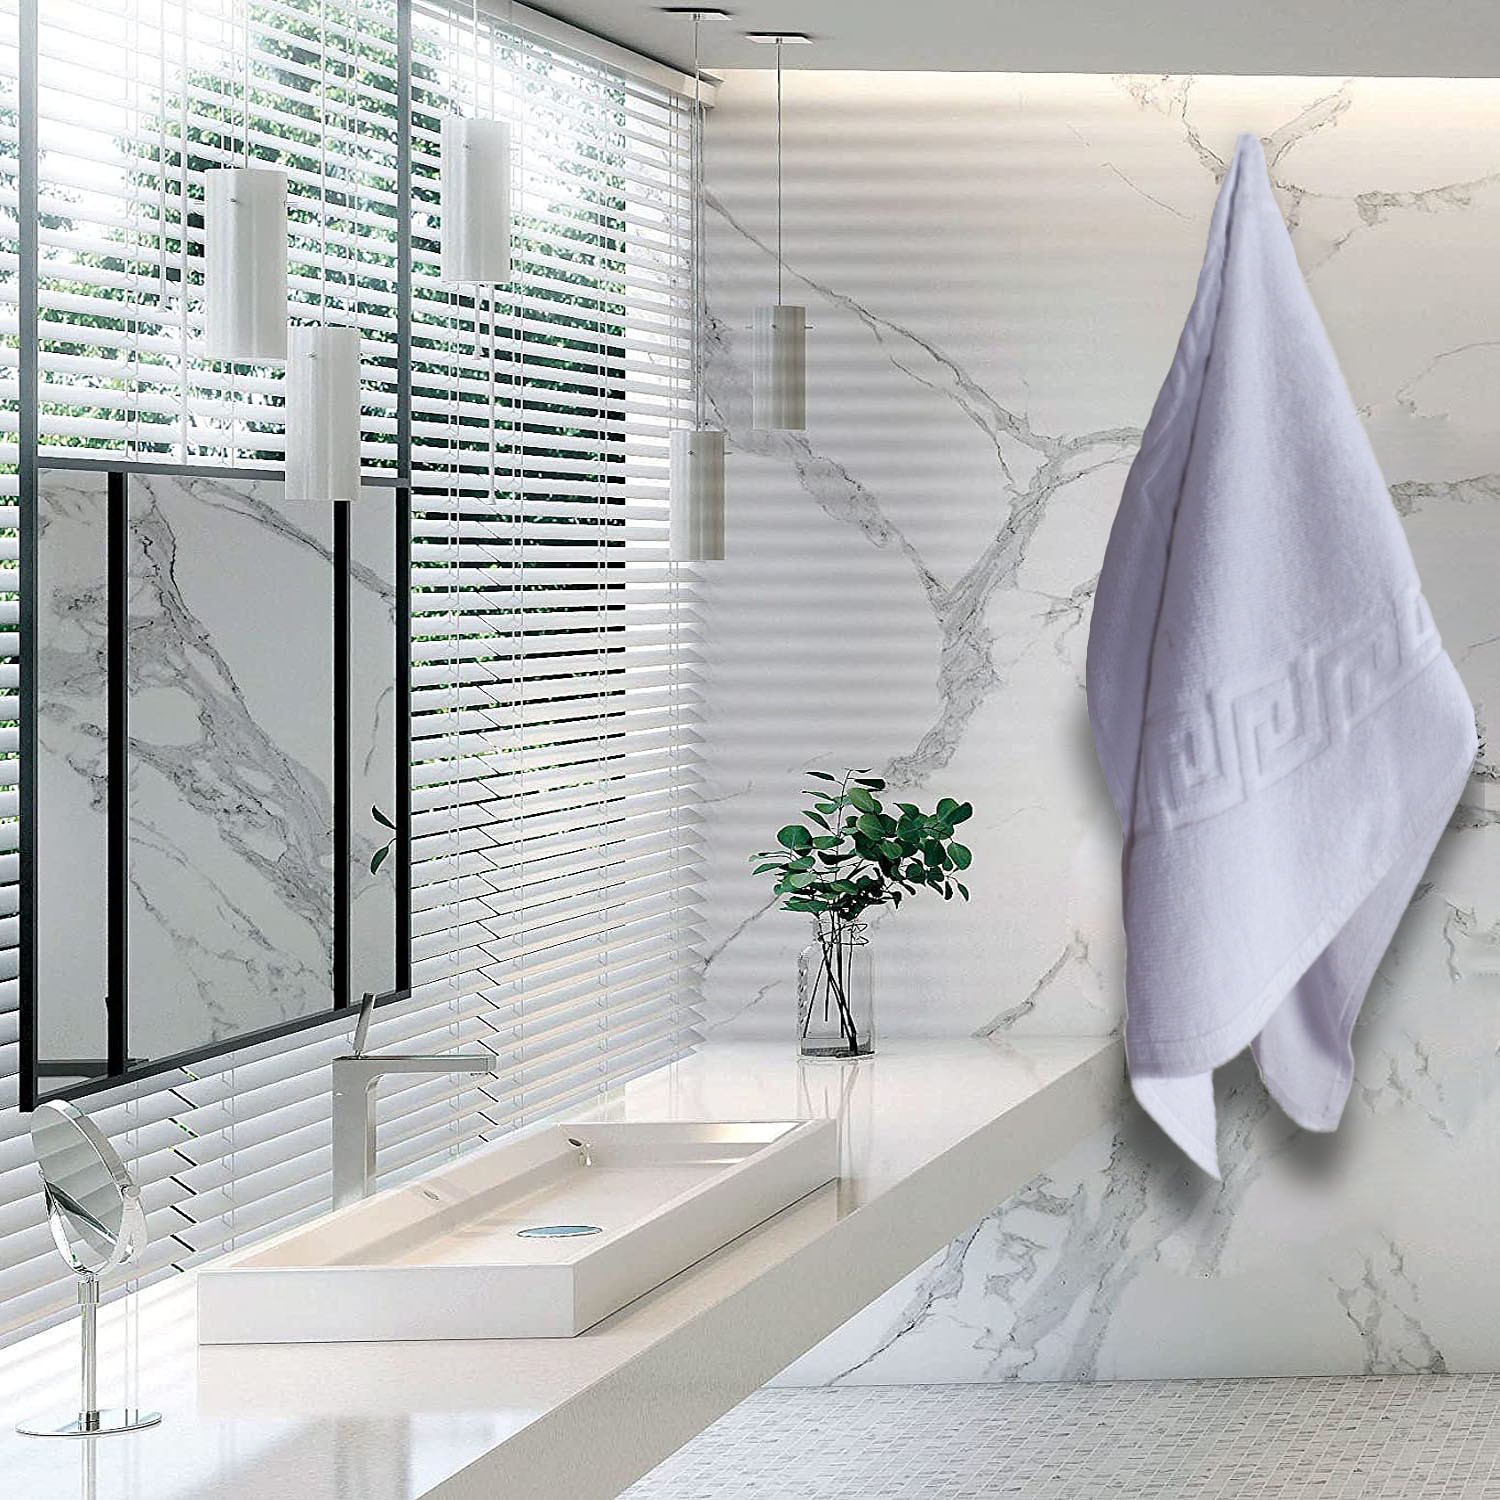 Kuber Industries Greek Design Super Absorbent Cotton 400 GSM Hand Towel|Face Towel|Bath Nets for Men,Women,Kids,30x20 Inches, (White)